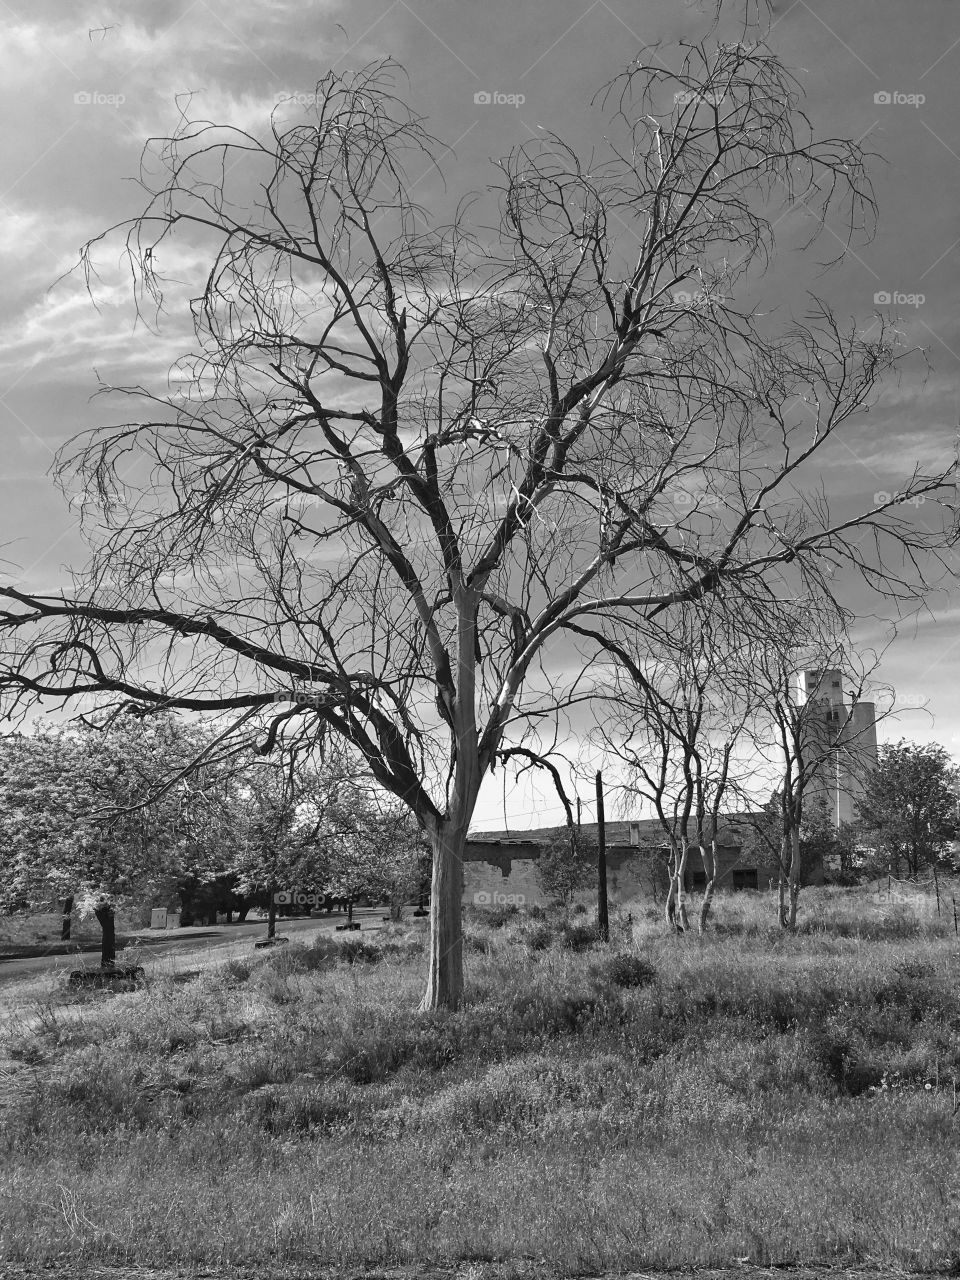 Barren Tree in Wheat Country